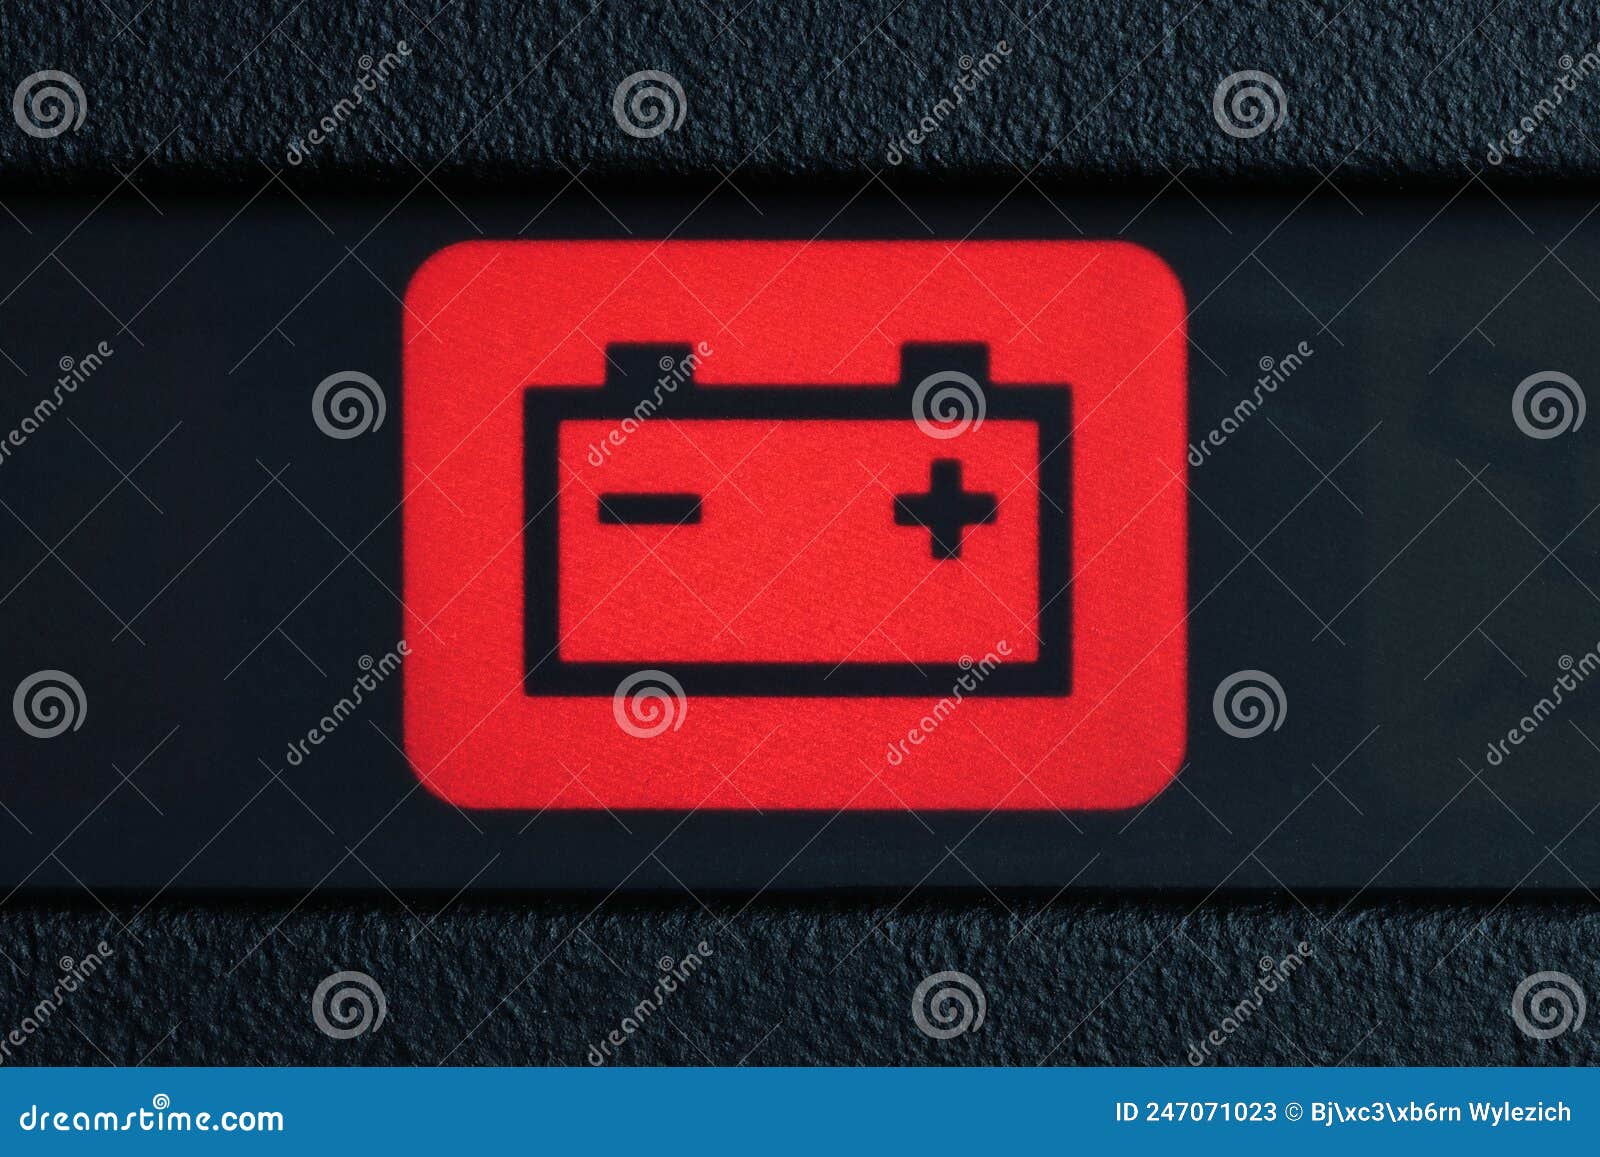 Battery Warning Light Stock Image Image Of Dashboard 247071023